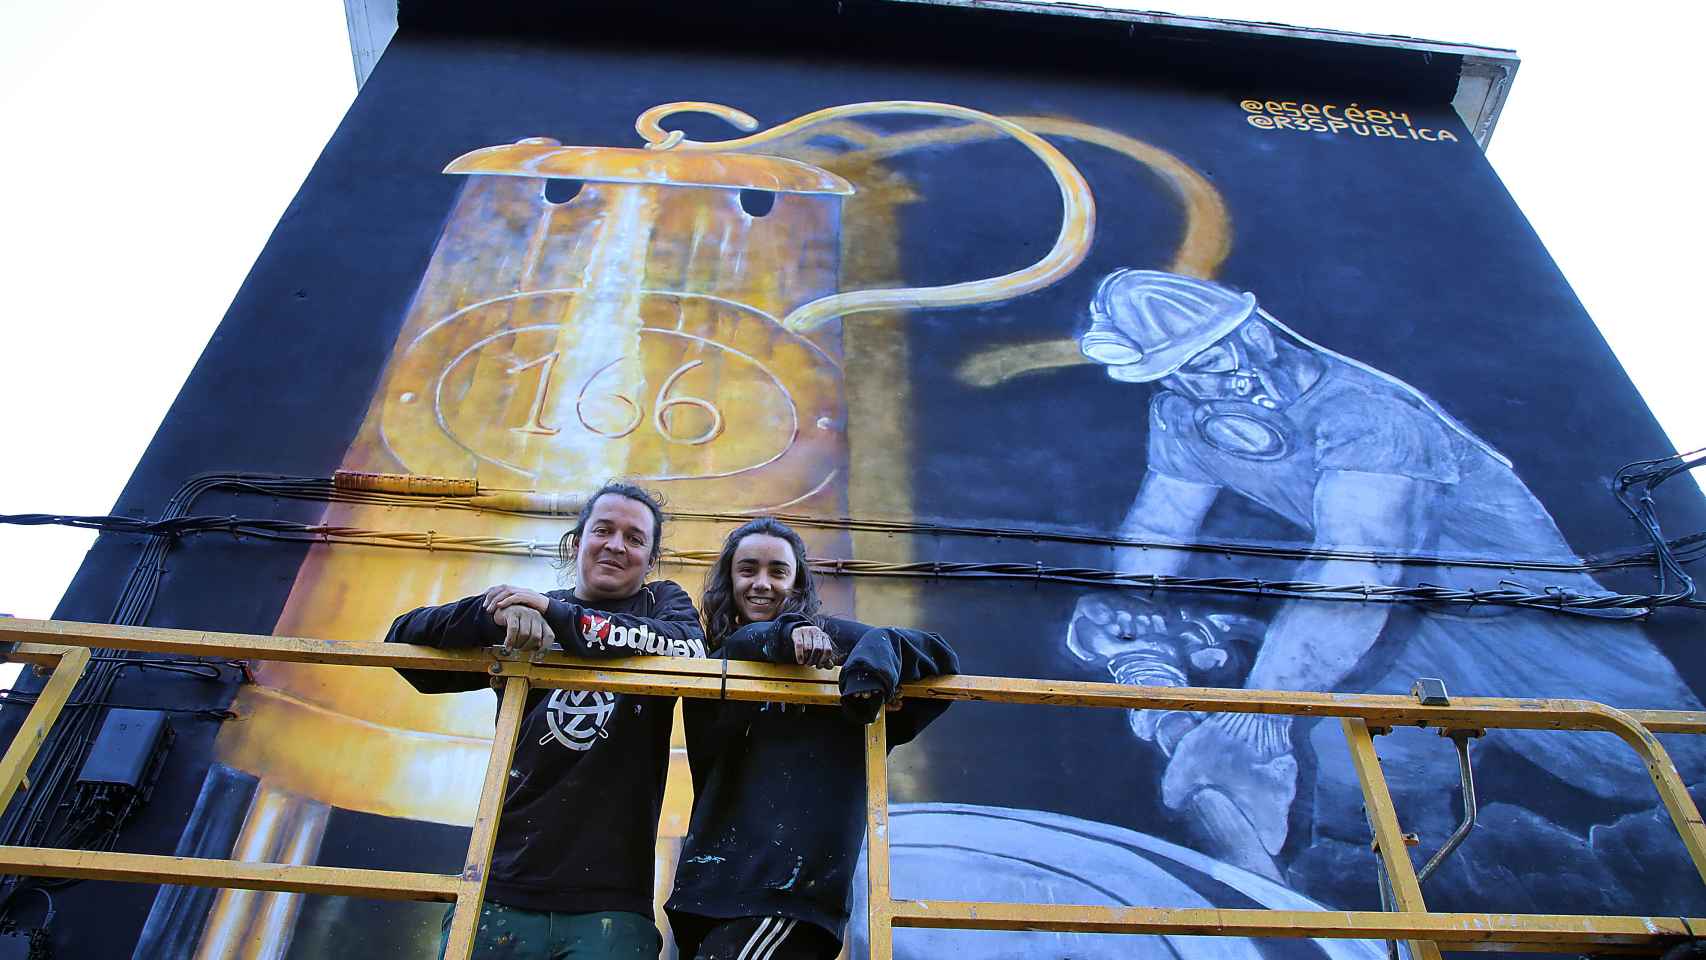 Ciñera refuerza su esencia con un gran mural